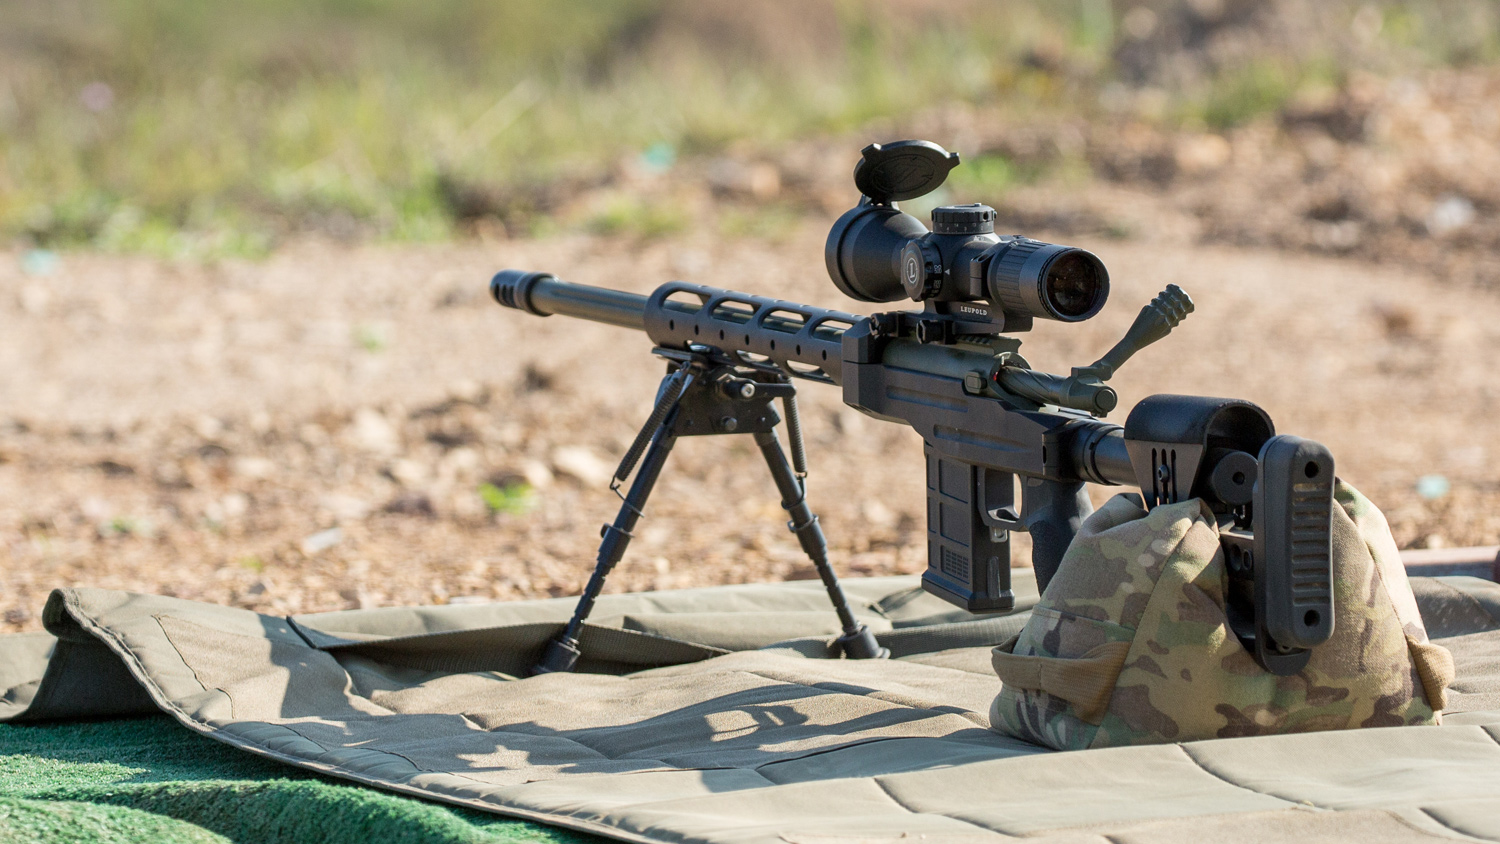 50 Yard Zero Sight-In Target - 25 Pack – Freedom Gun Targets